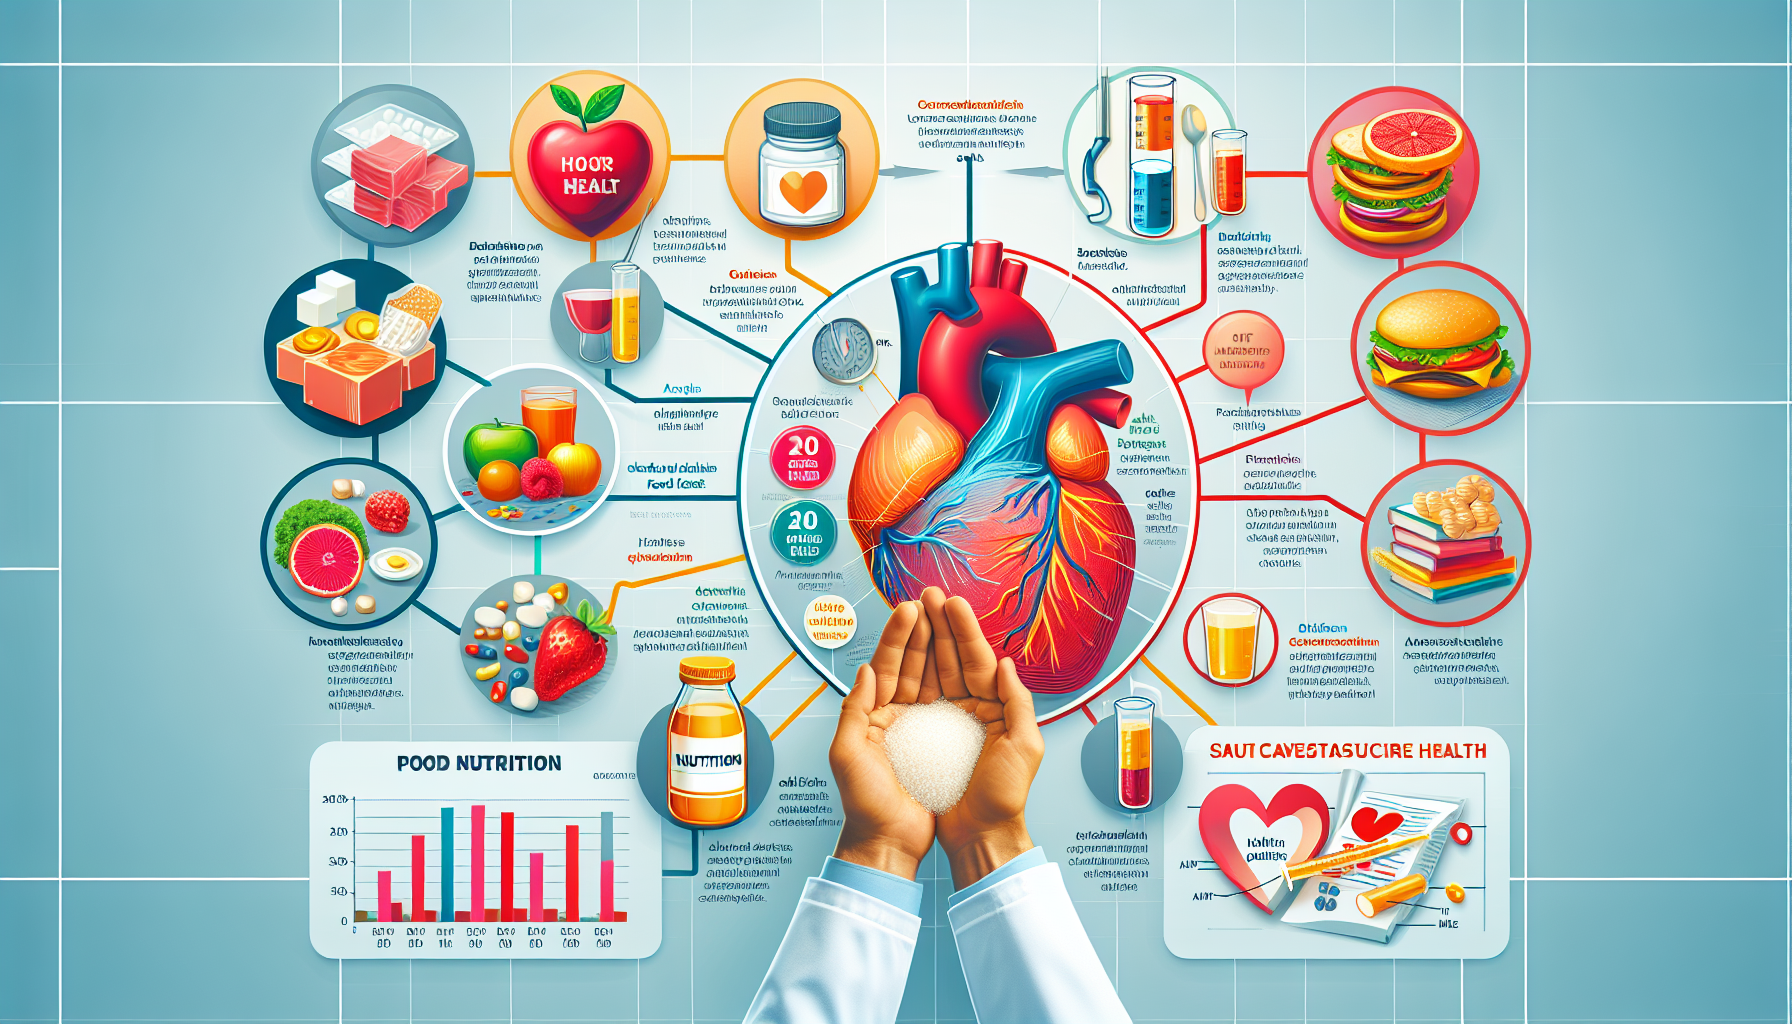 Does Bad Nutrition Affect Cardiovascular Health?